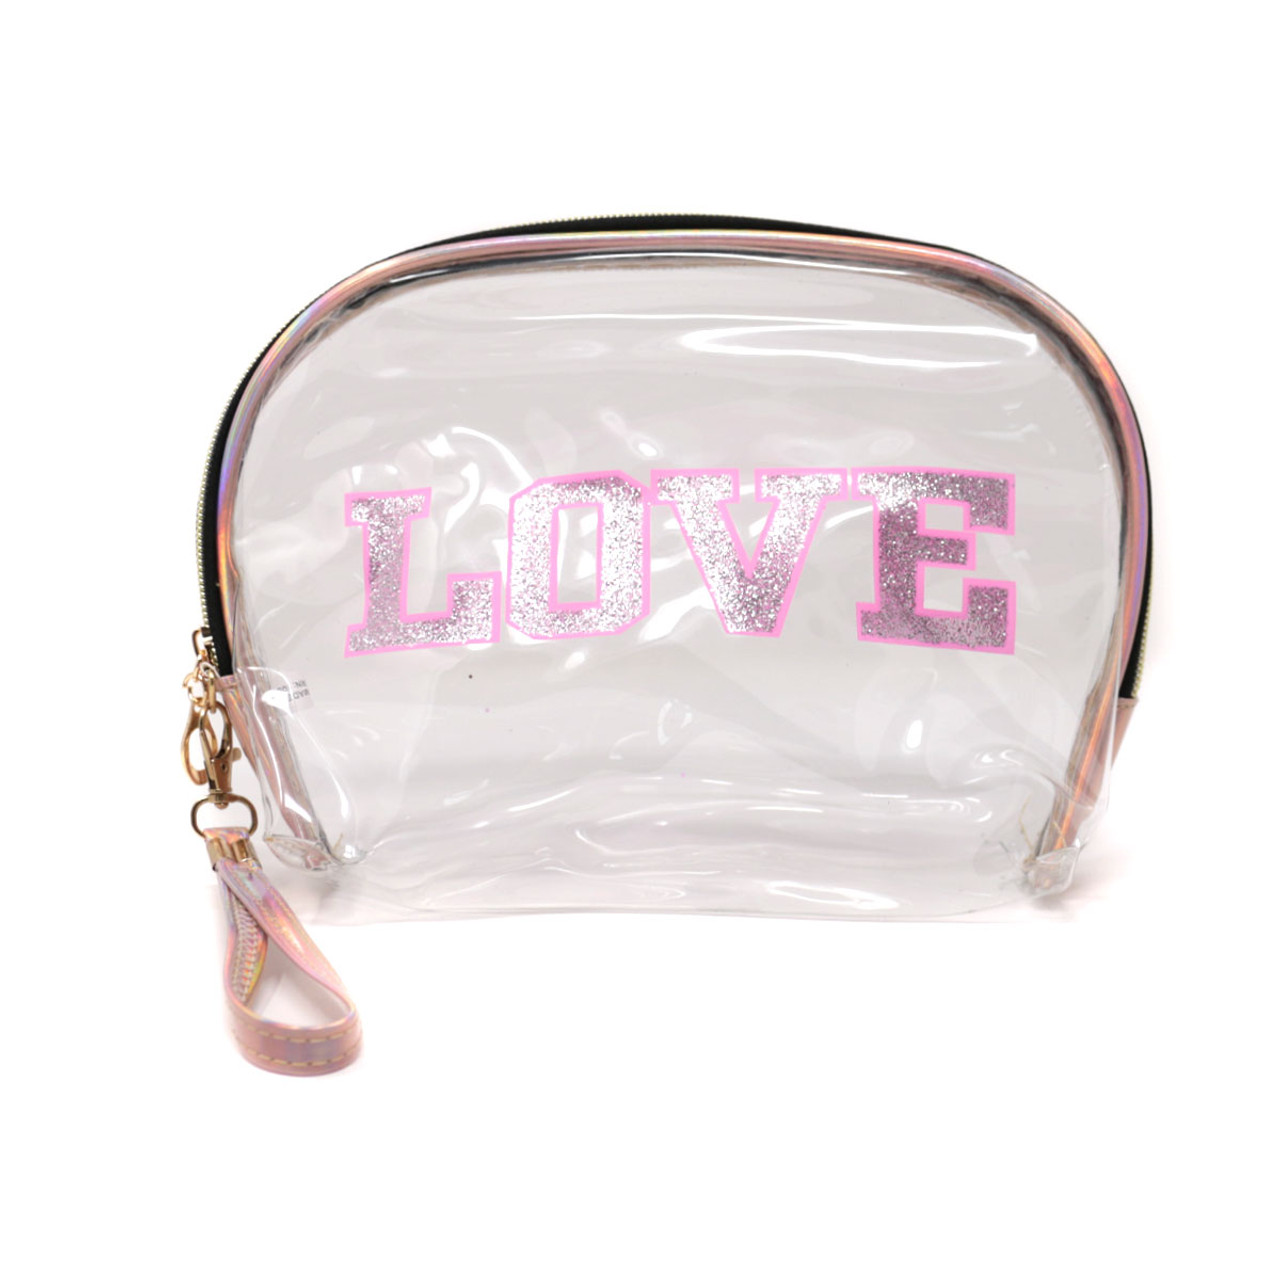 Victoria's Secret Striped Makeup Bag: Buy Online at Best Price in